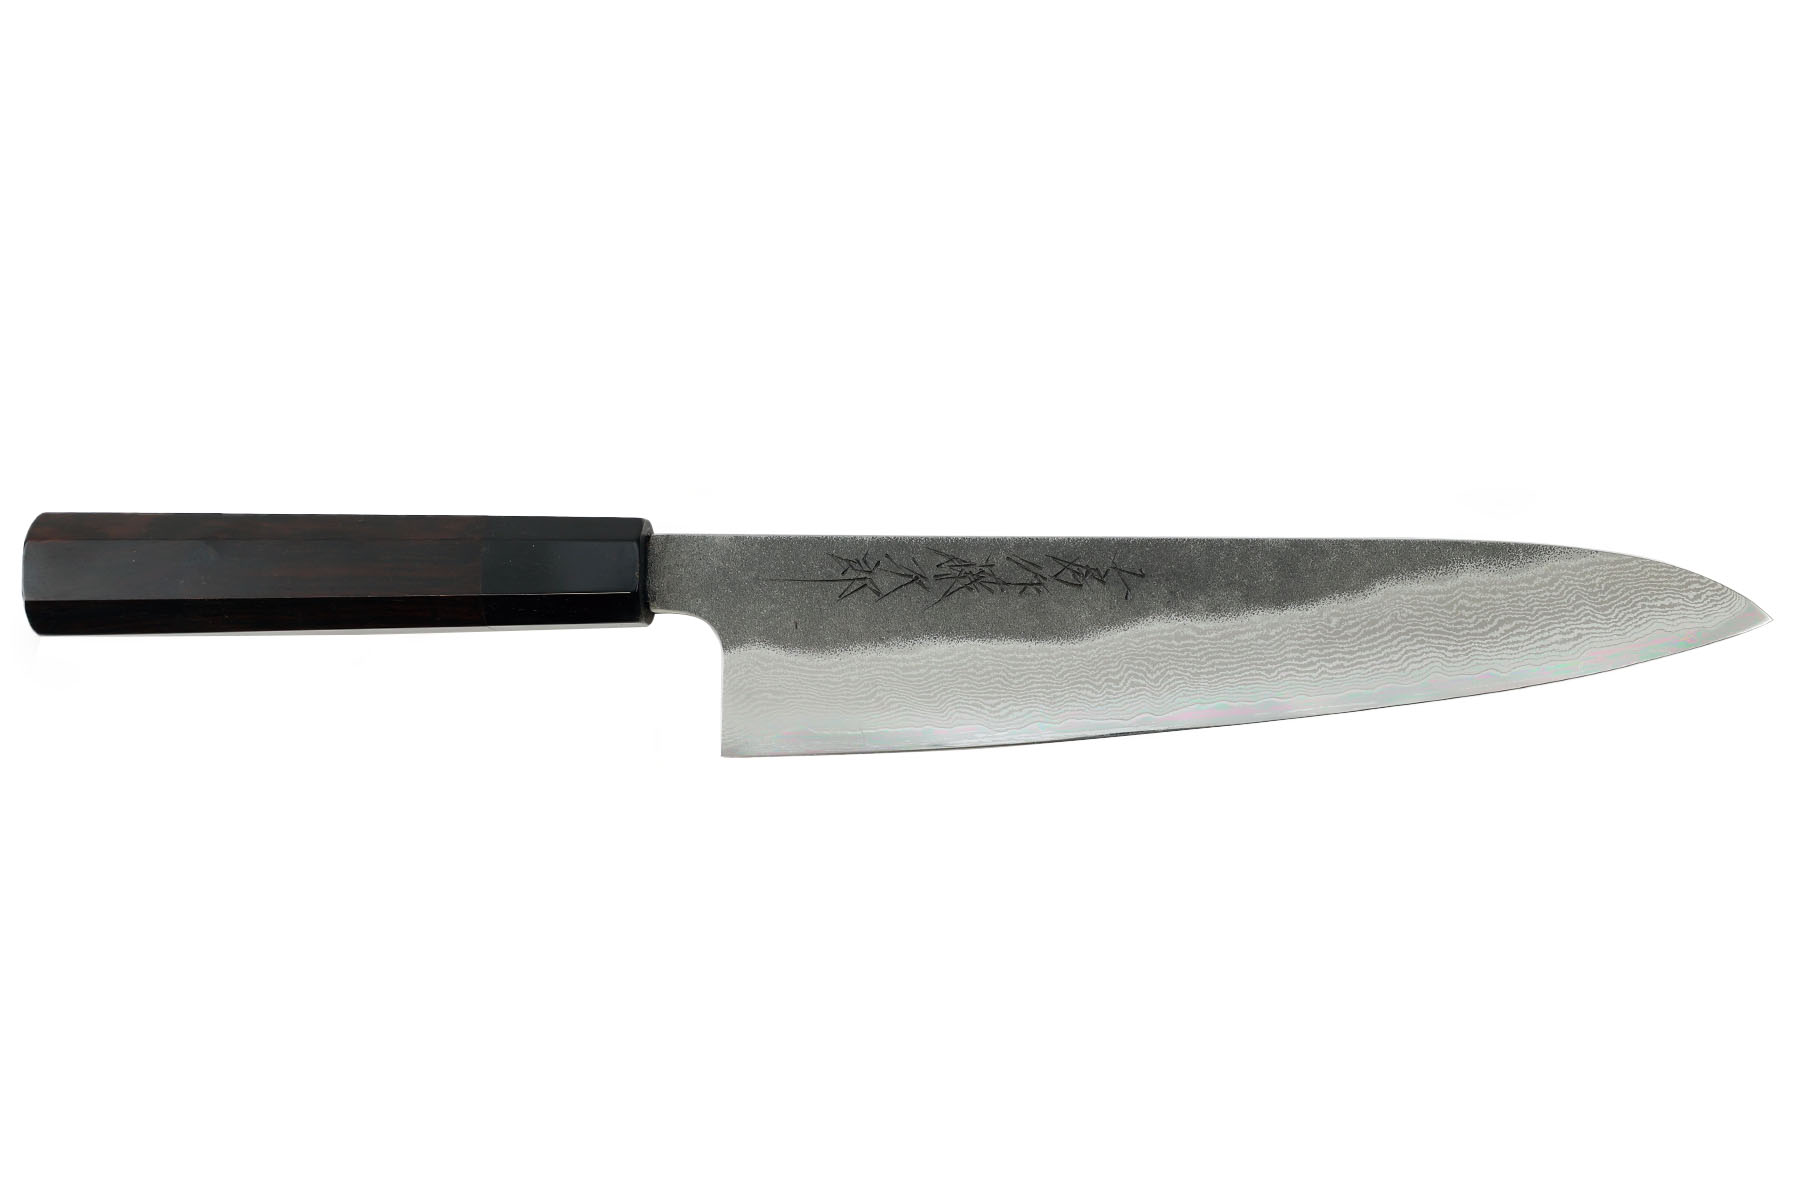 Couteau japonais artisanal Tojiro Handmade VG10 Damas - Couteau gyuto 21 cm